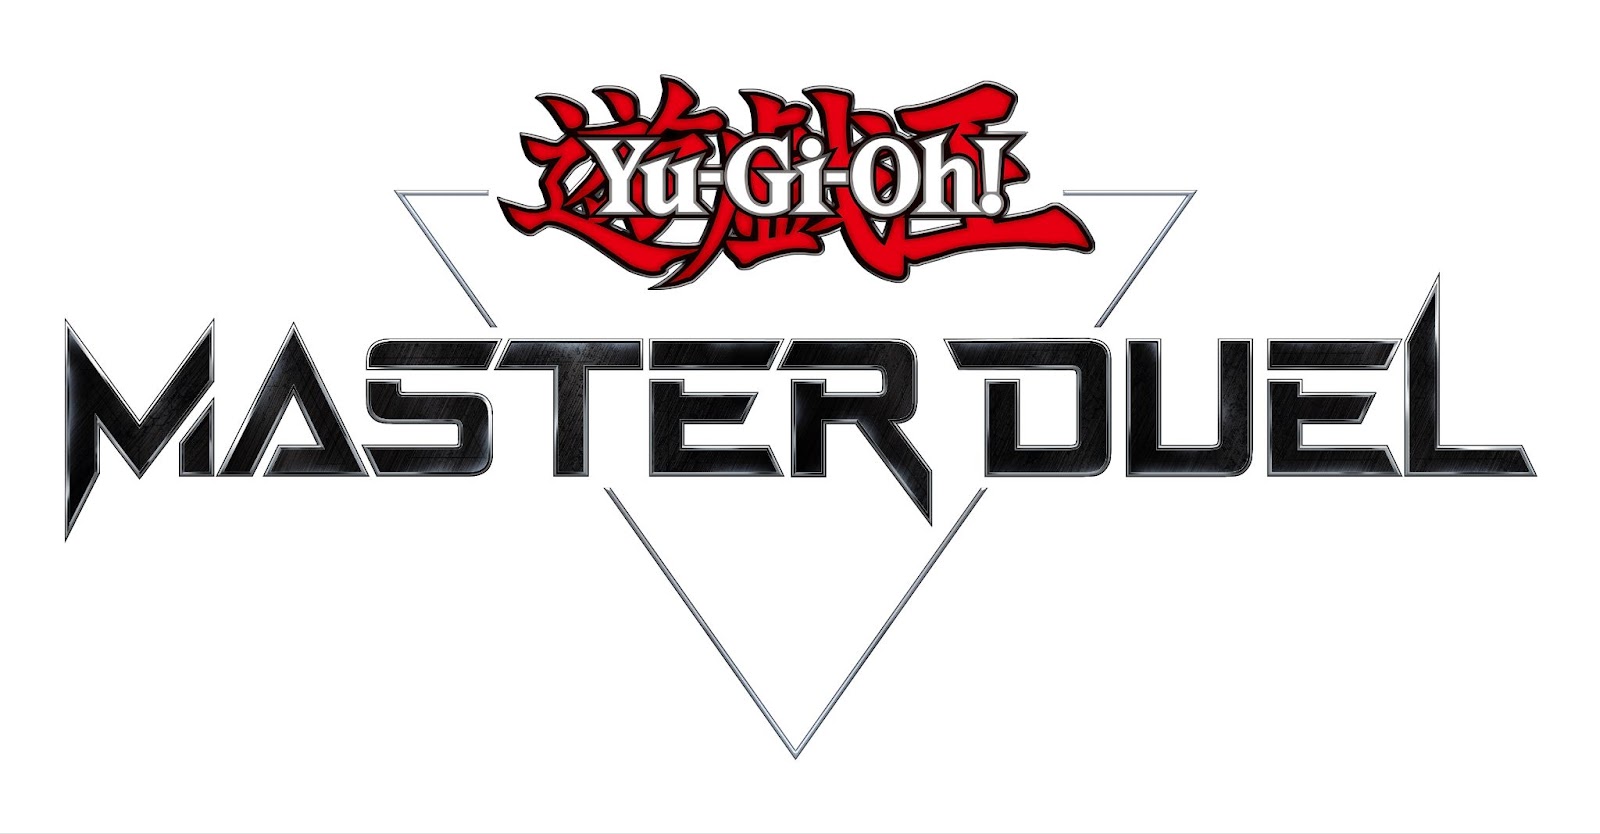 Gratis 1000 Gems Yu-Gi-Oh! di perayaan 60 juta download game Yu-Gi-Oh!  MASTER DUEL